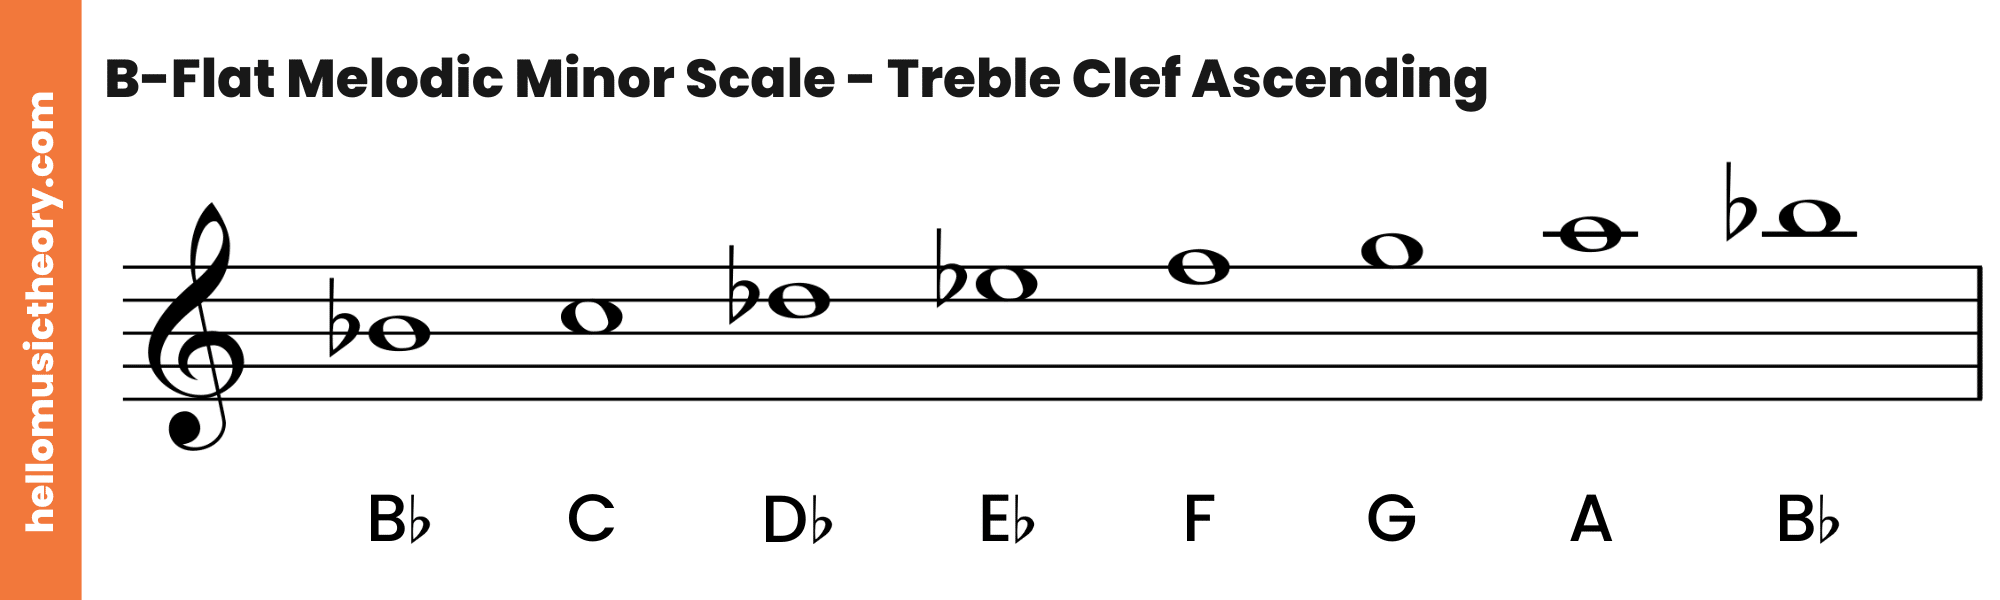 B-Flat Melodic Minor Scale Treble Clef Ascending